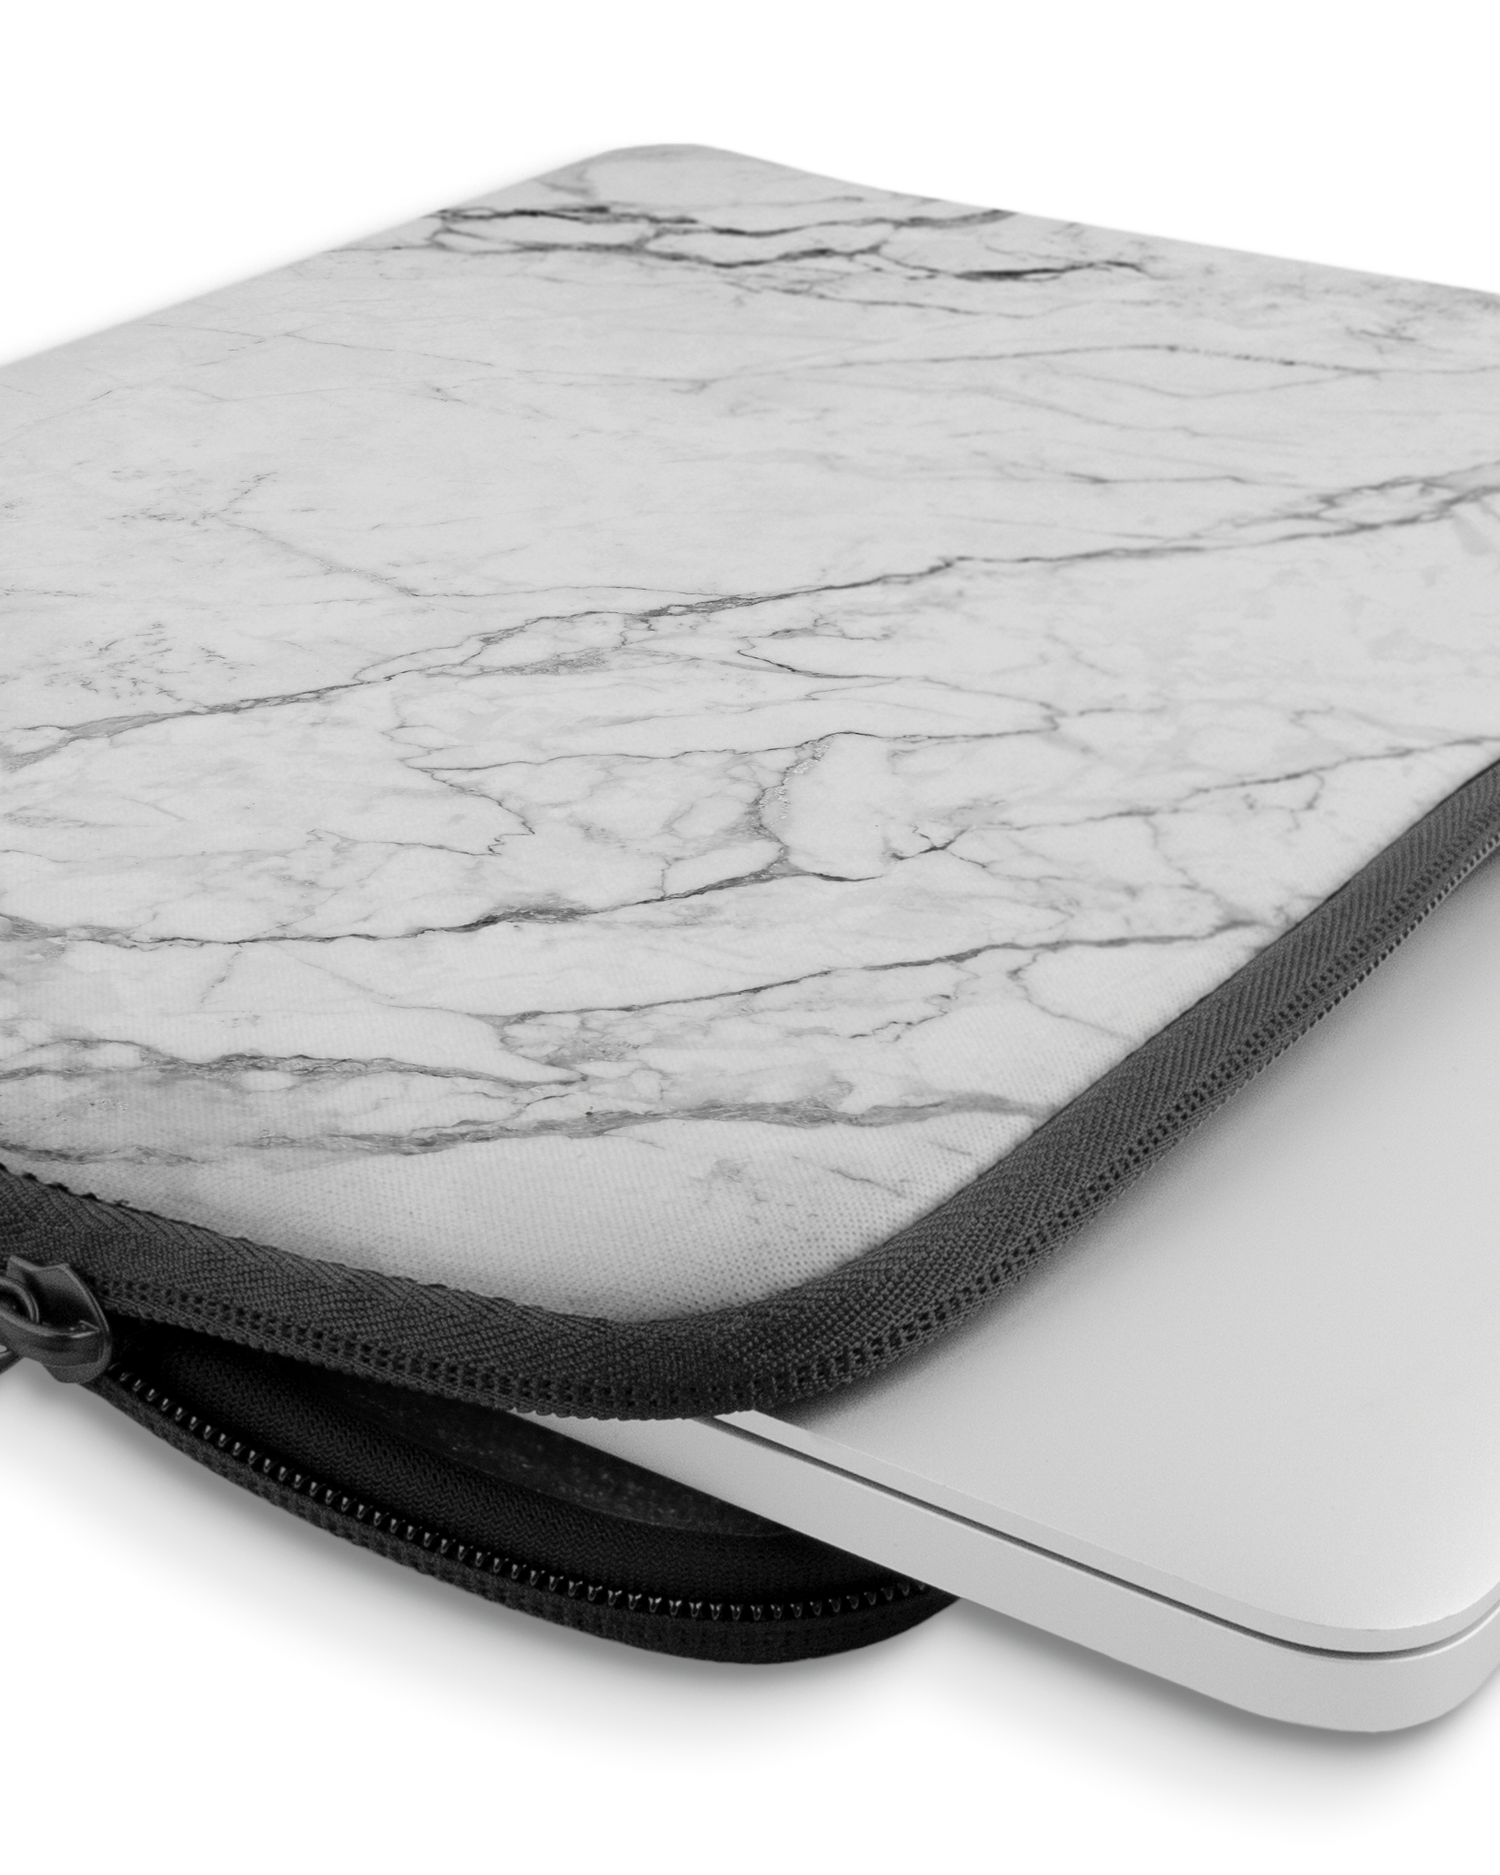 White Marble Laptophülle 13-14 Zoll mit Gerät im Inneren